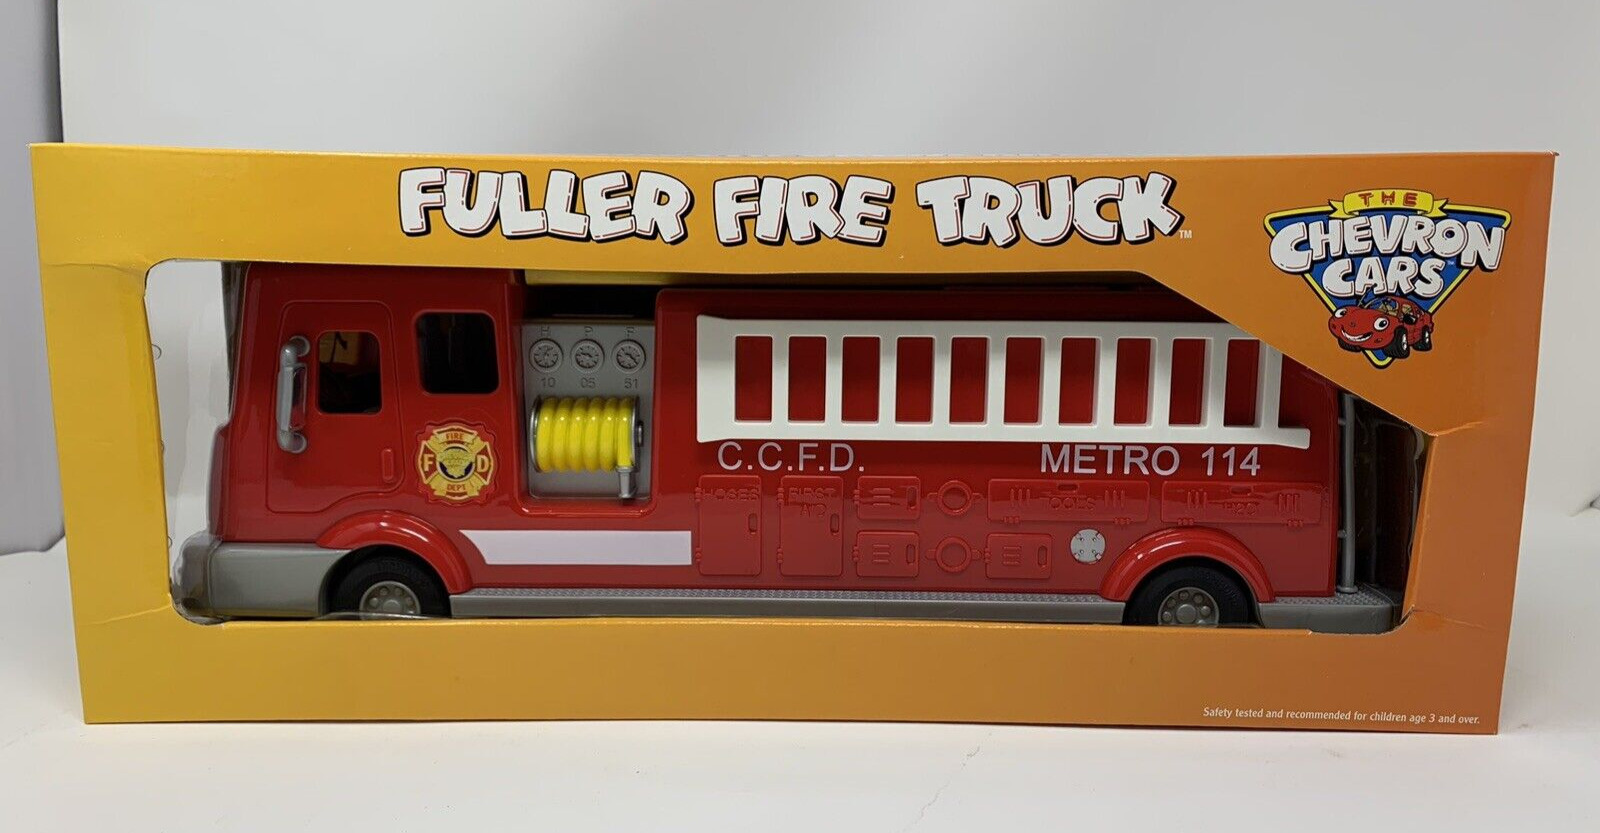 Chevron Cars Fuller Fire Truck Original Box Collectible Toy Fire Truck Year 2008